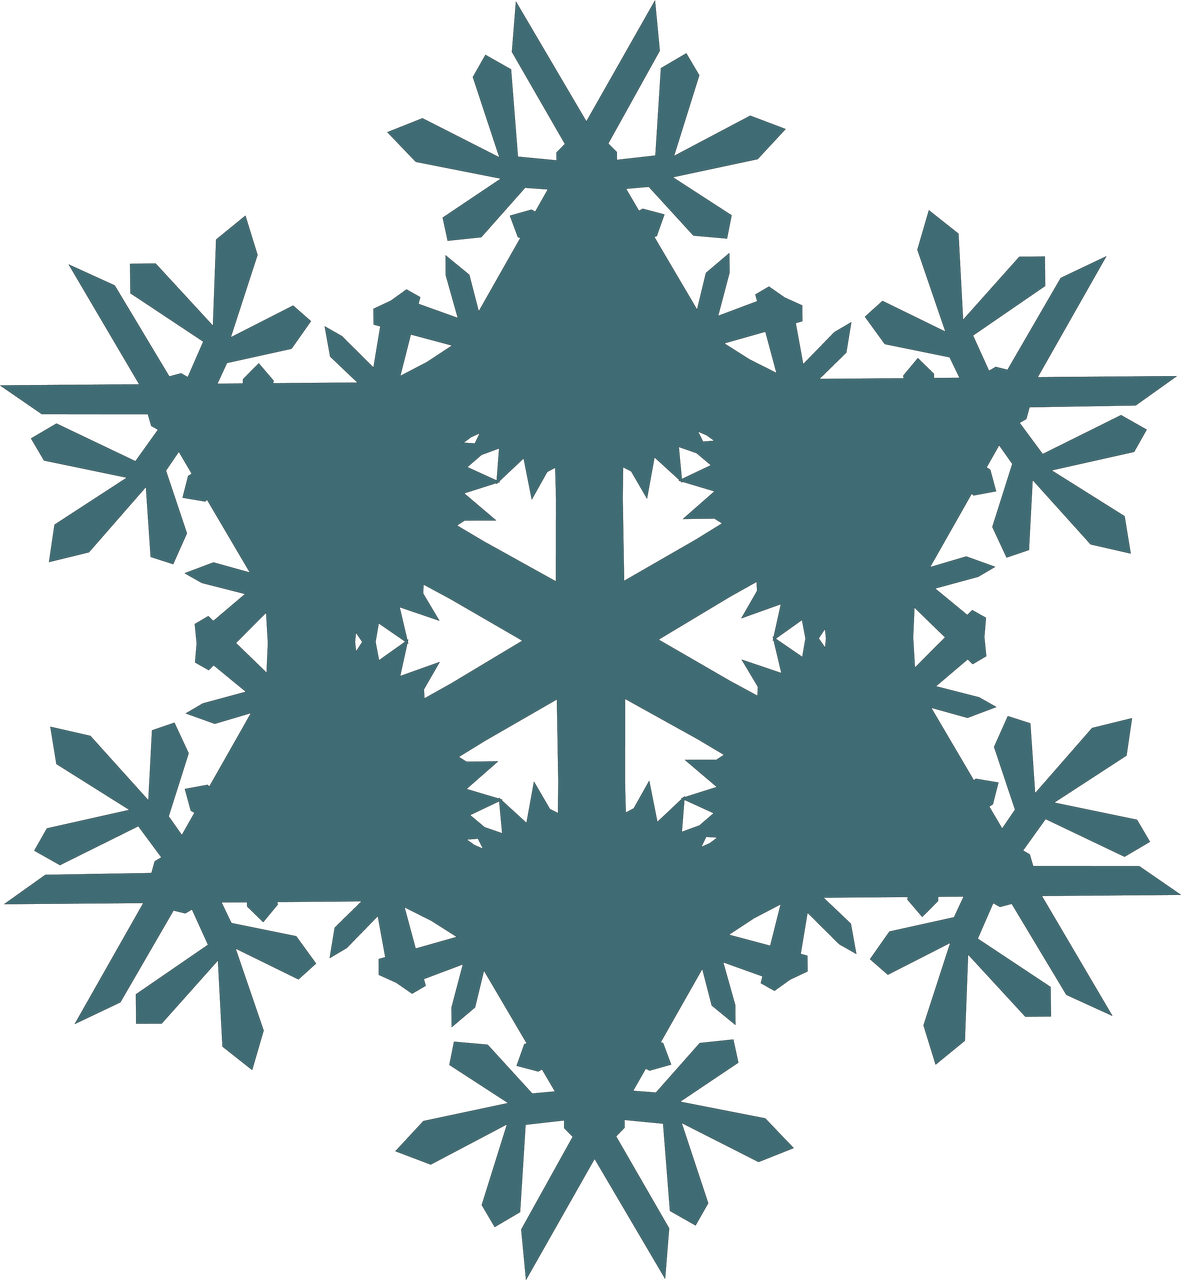 Snowflake #5 SVG Cut File - Snap Click Supply Co.